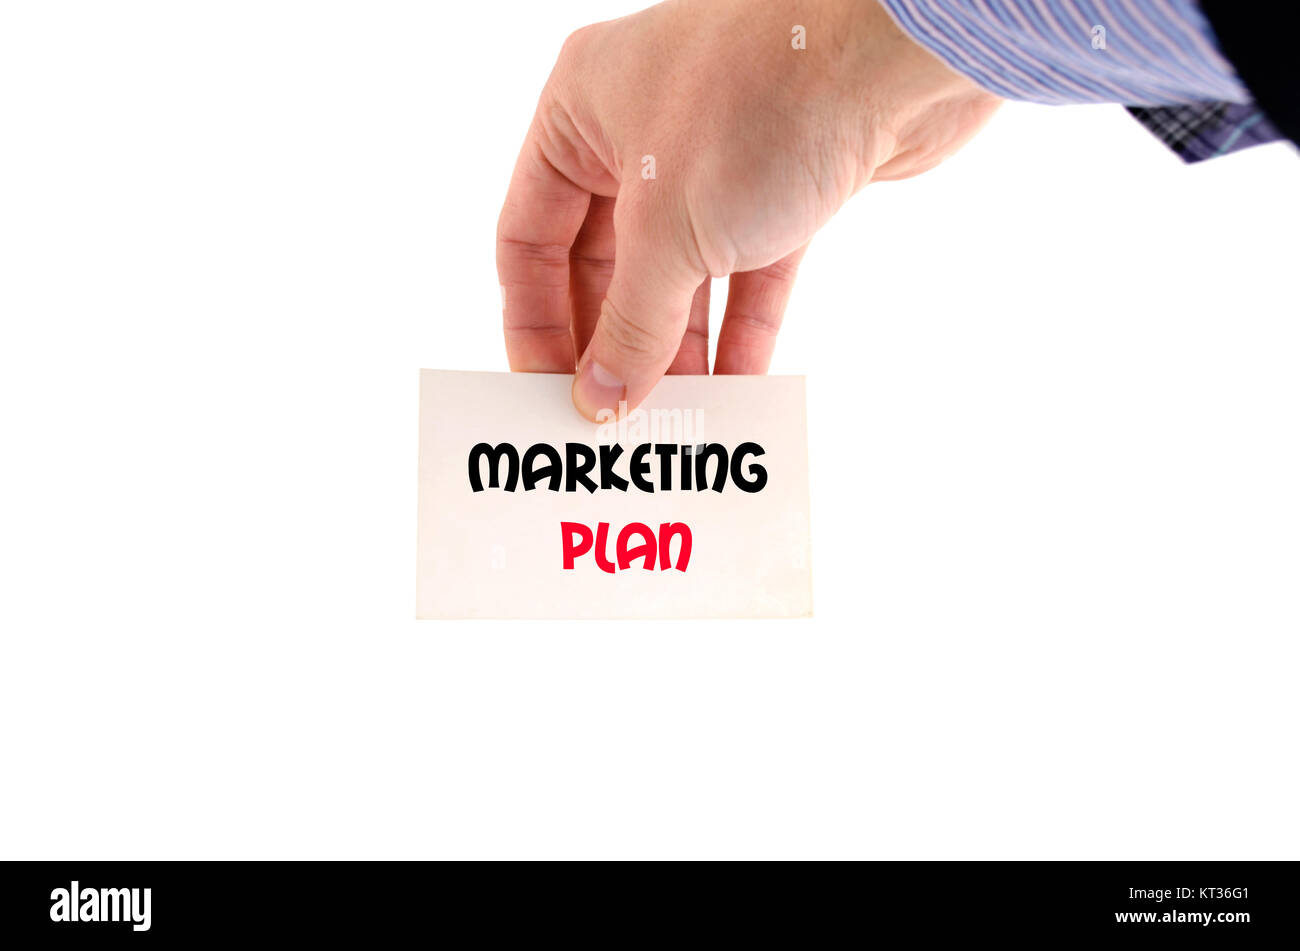 Marketing plan text concept Stock Photo